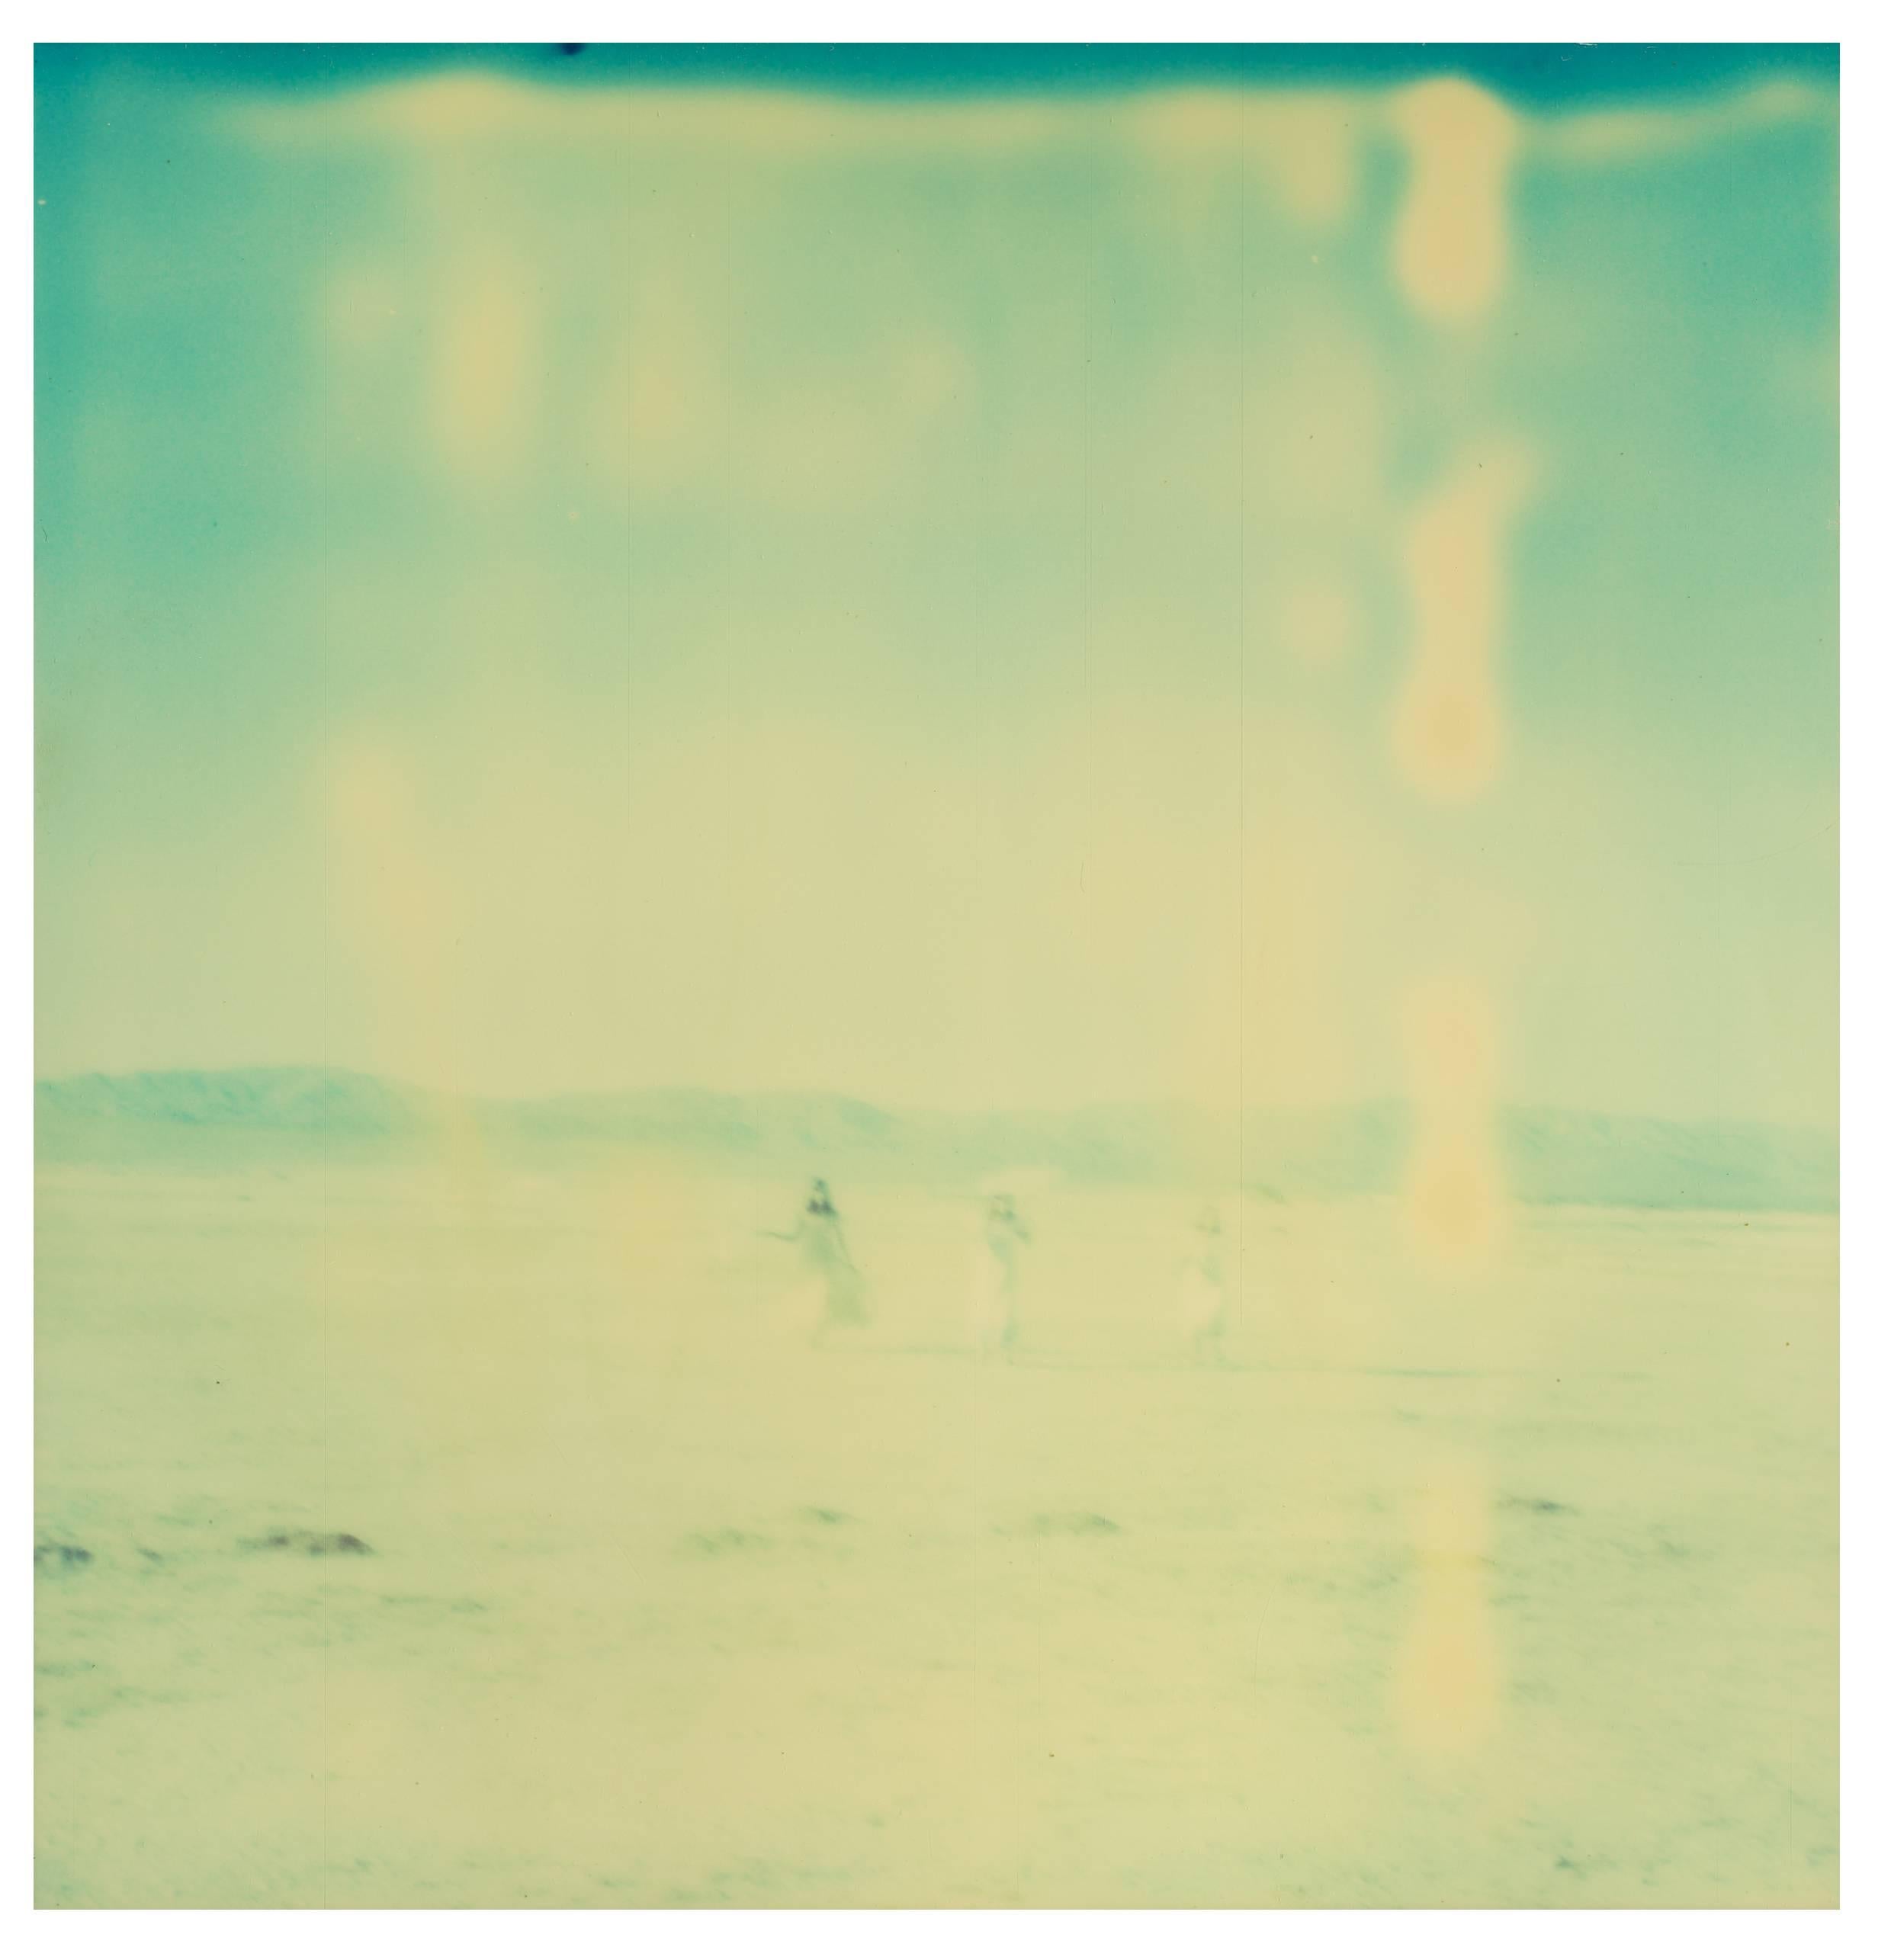 Enchanted (Dream Scene on Salt Lake), triptych - Polaroid, Contemporary, Color - Photograph by Stefanie Schneider